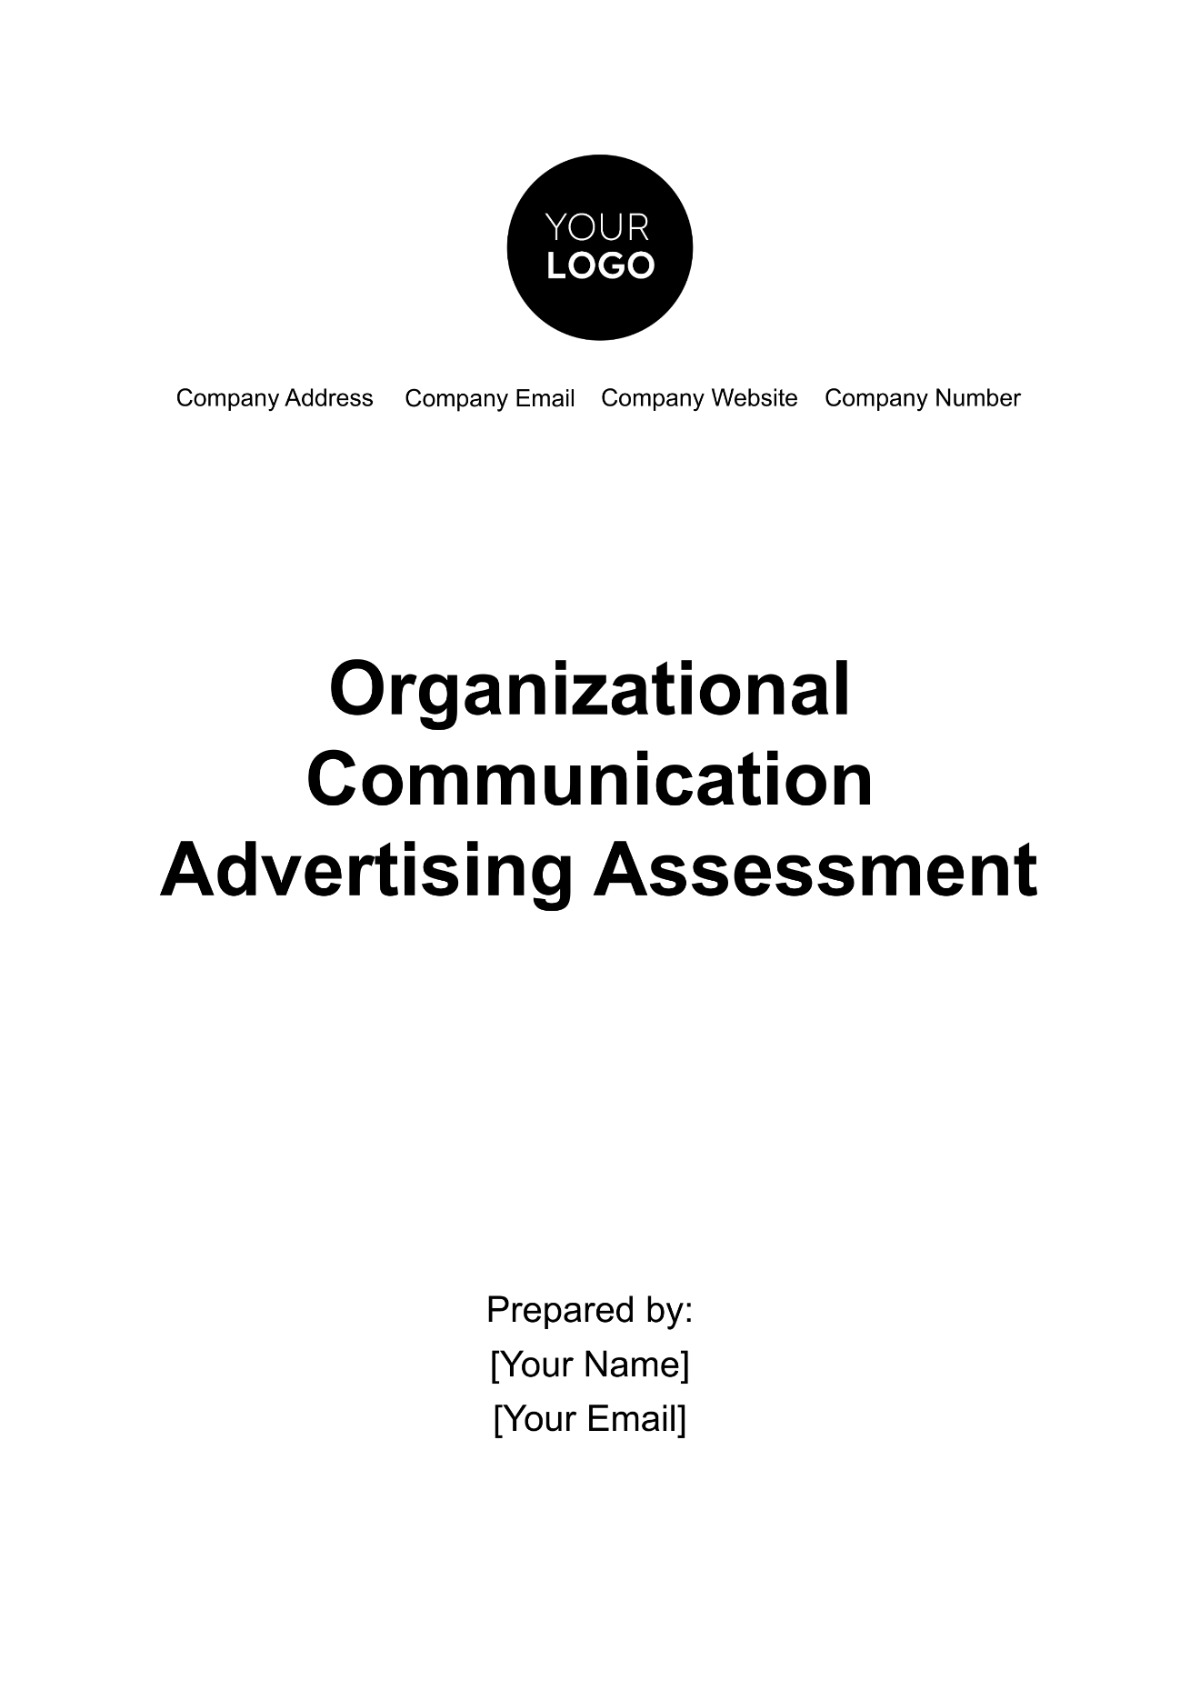 Organizational Communication Advertising Assessment Template